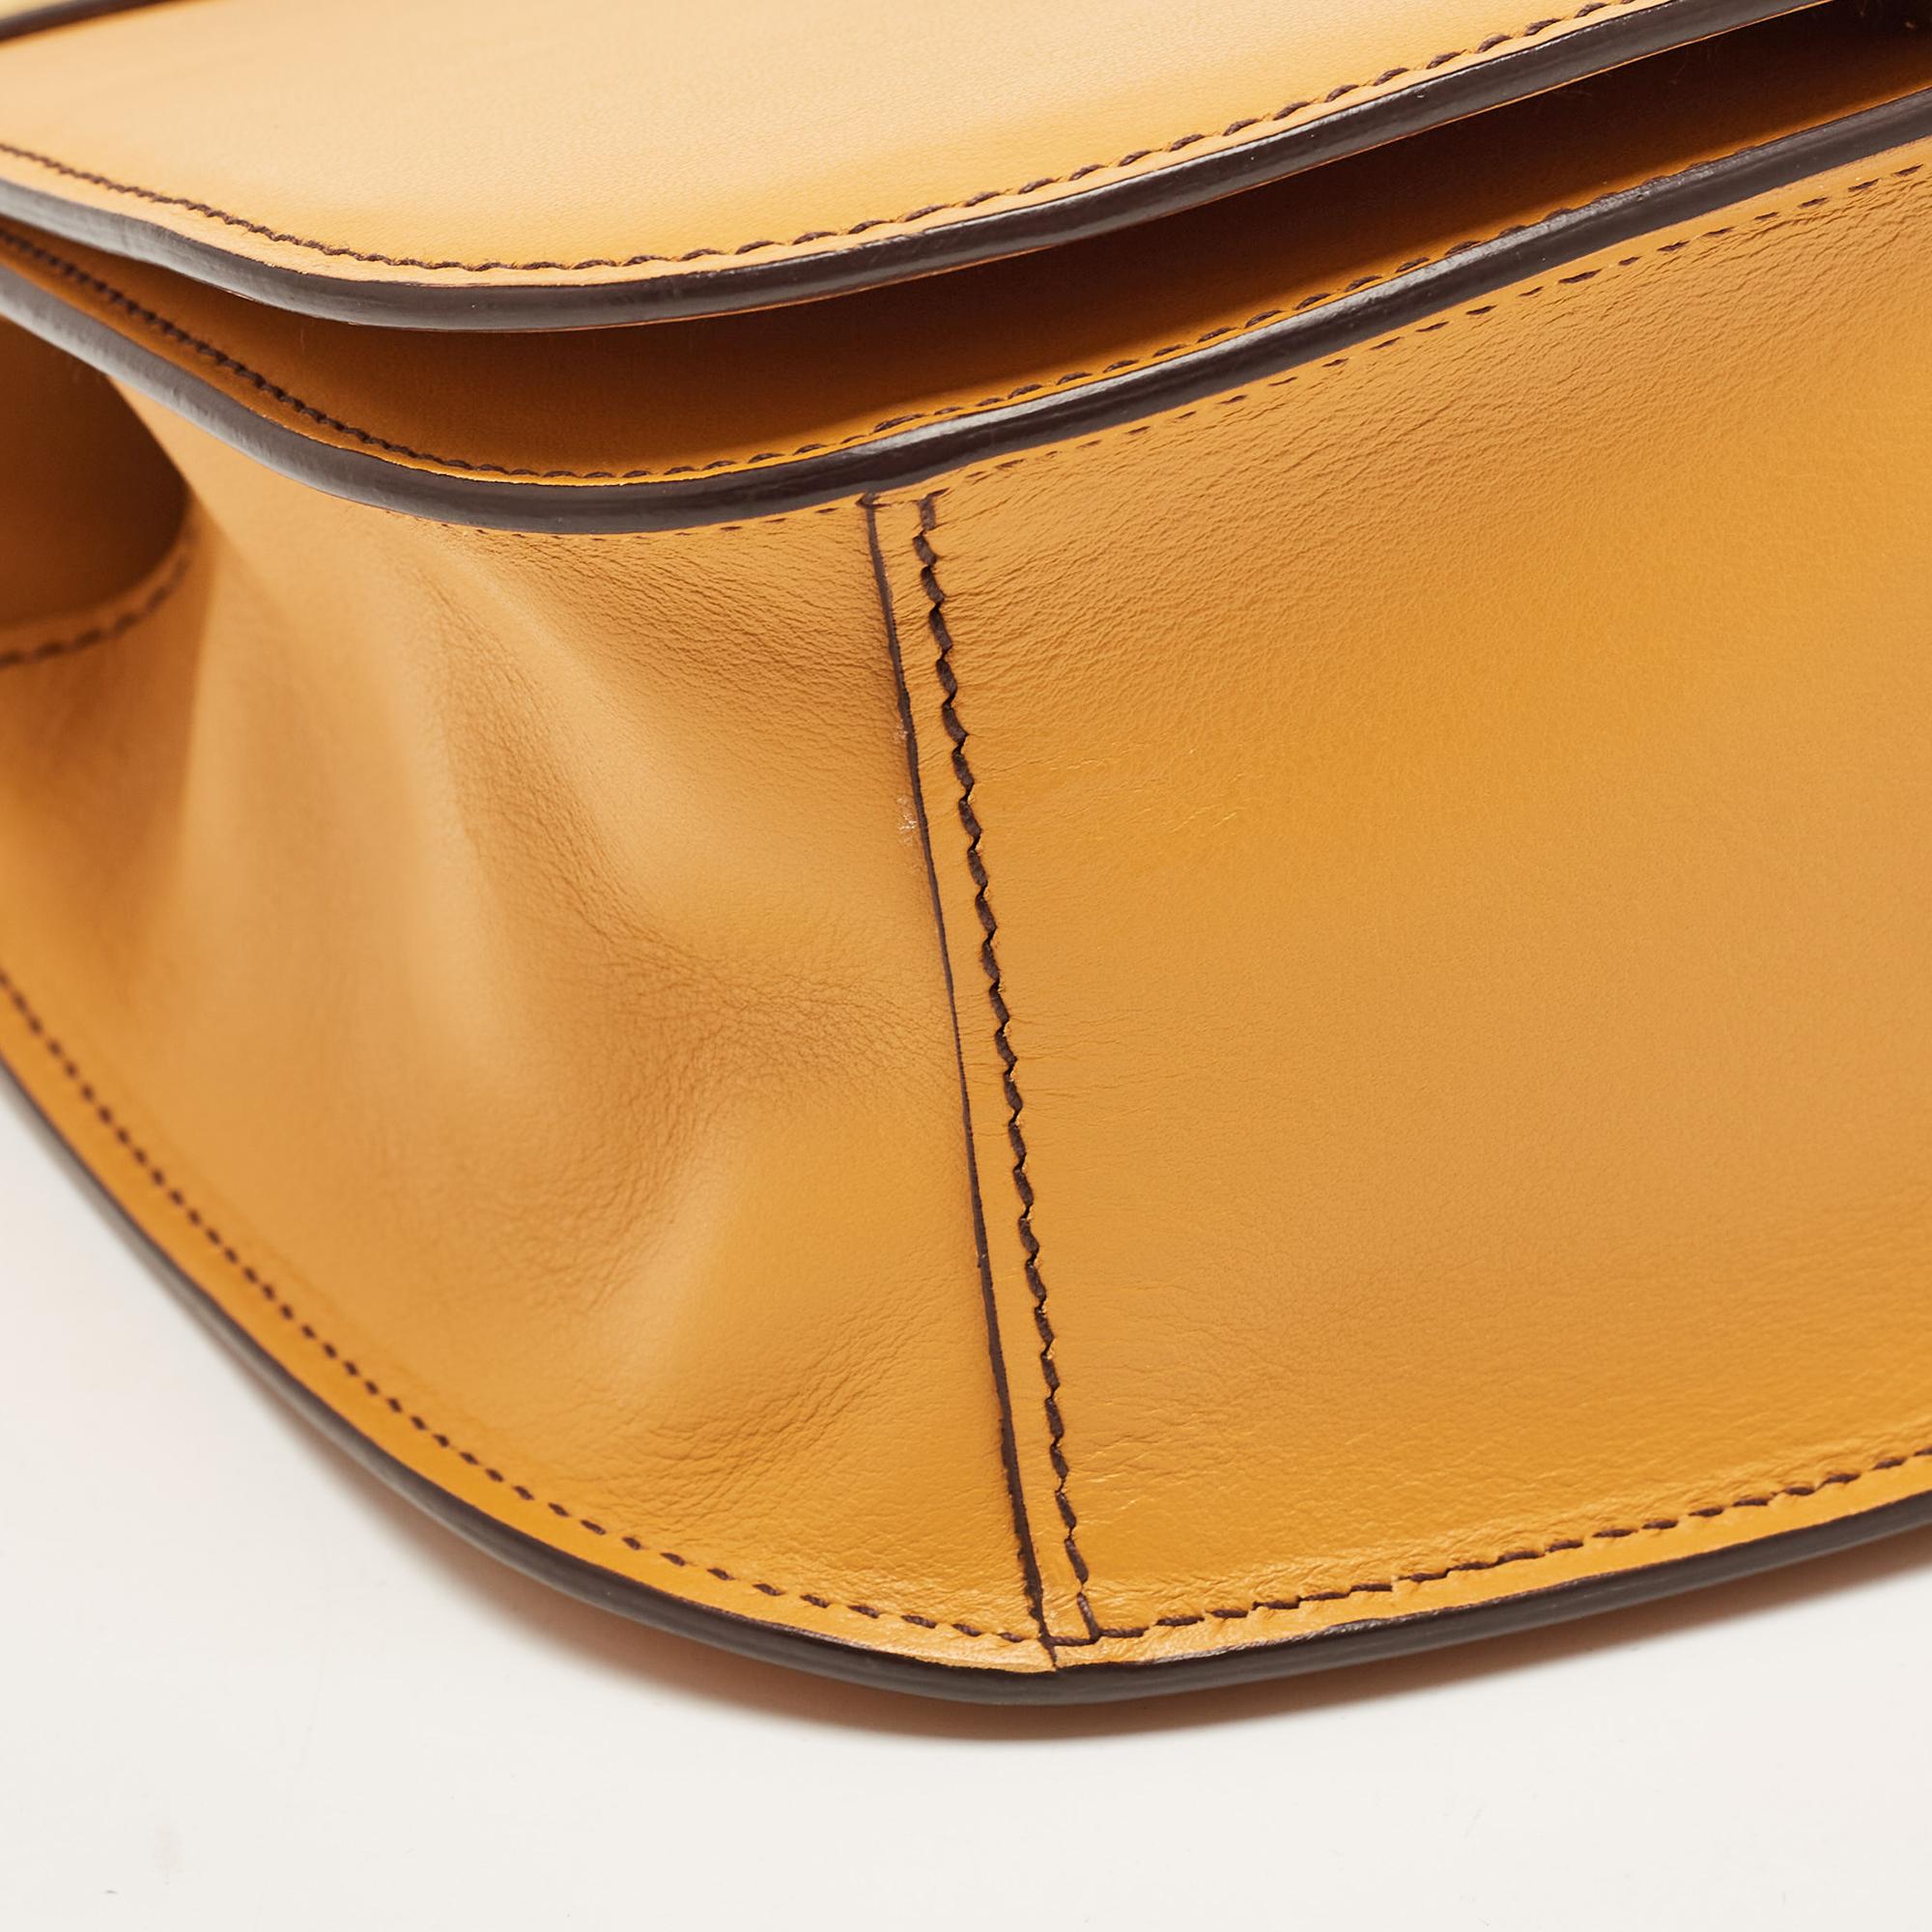 Prada Mustard Yellow/Choco Brown Leather Pionniere Saddle Bag 7